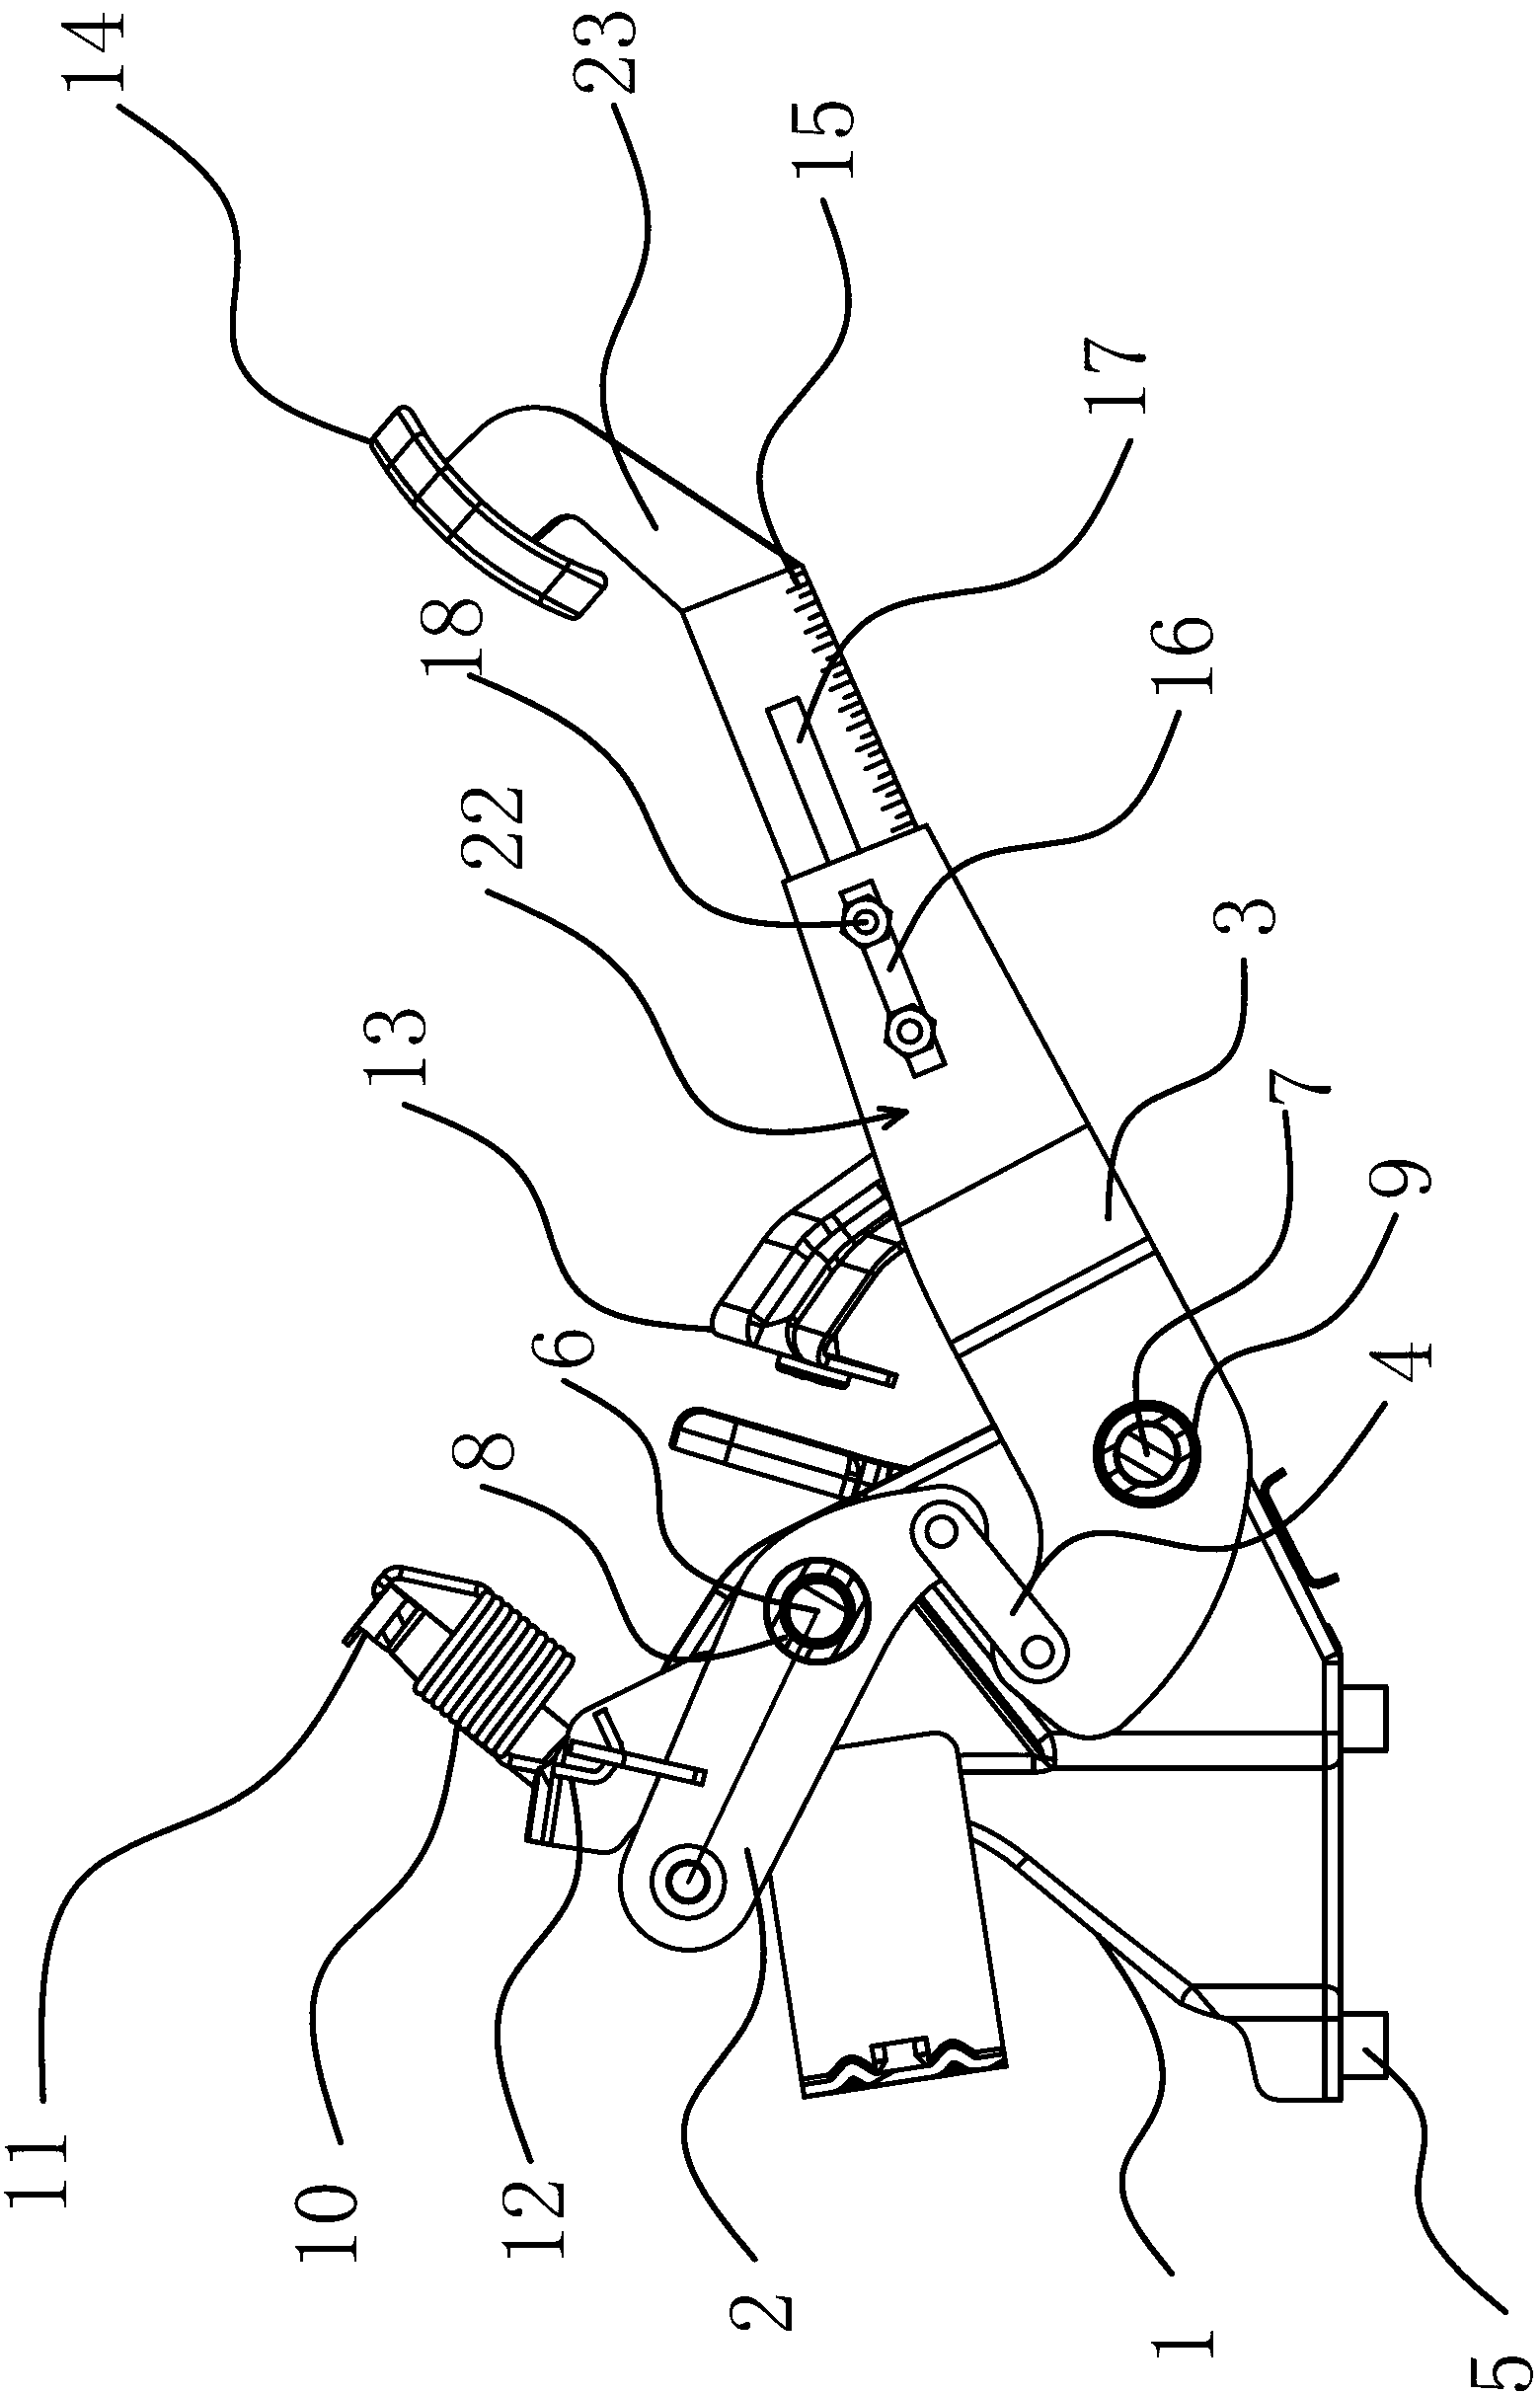 Automobile brake pedal component